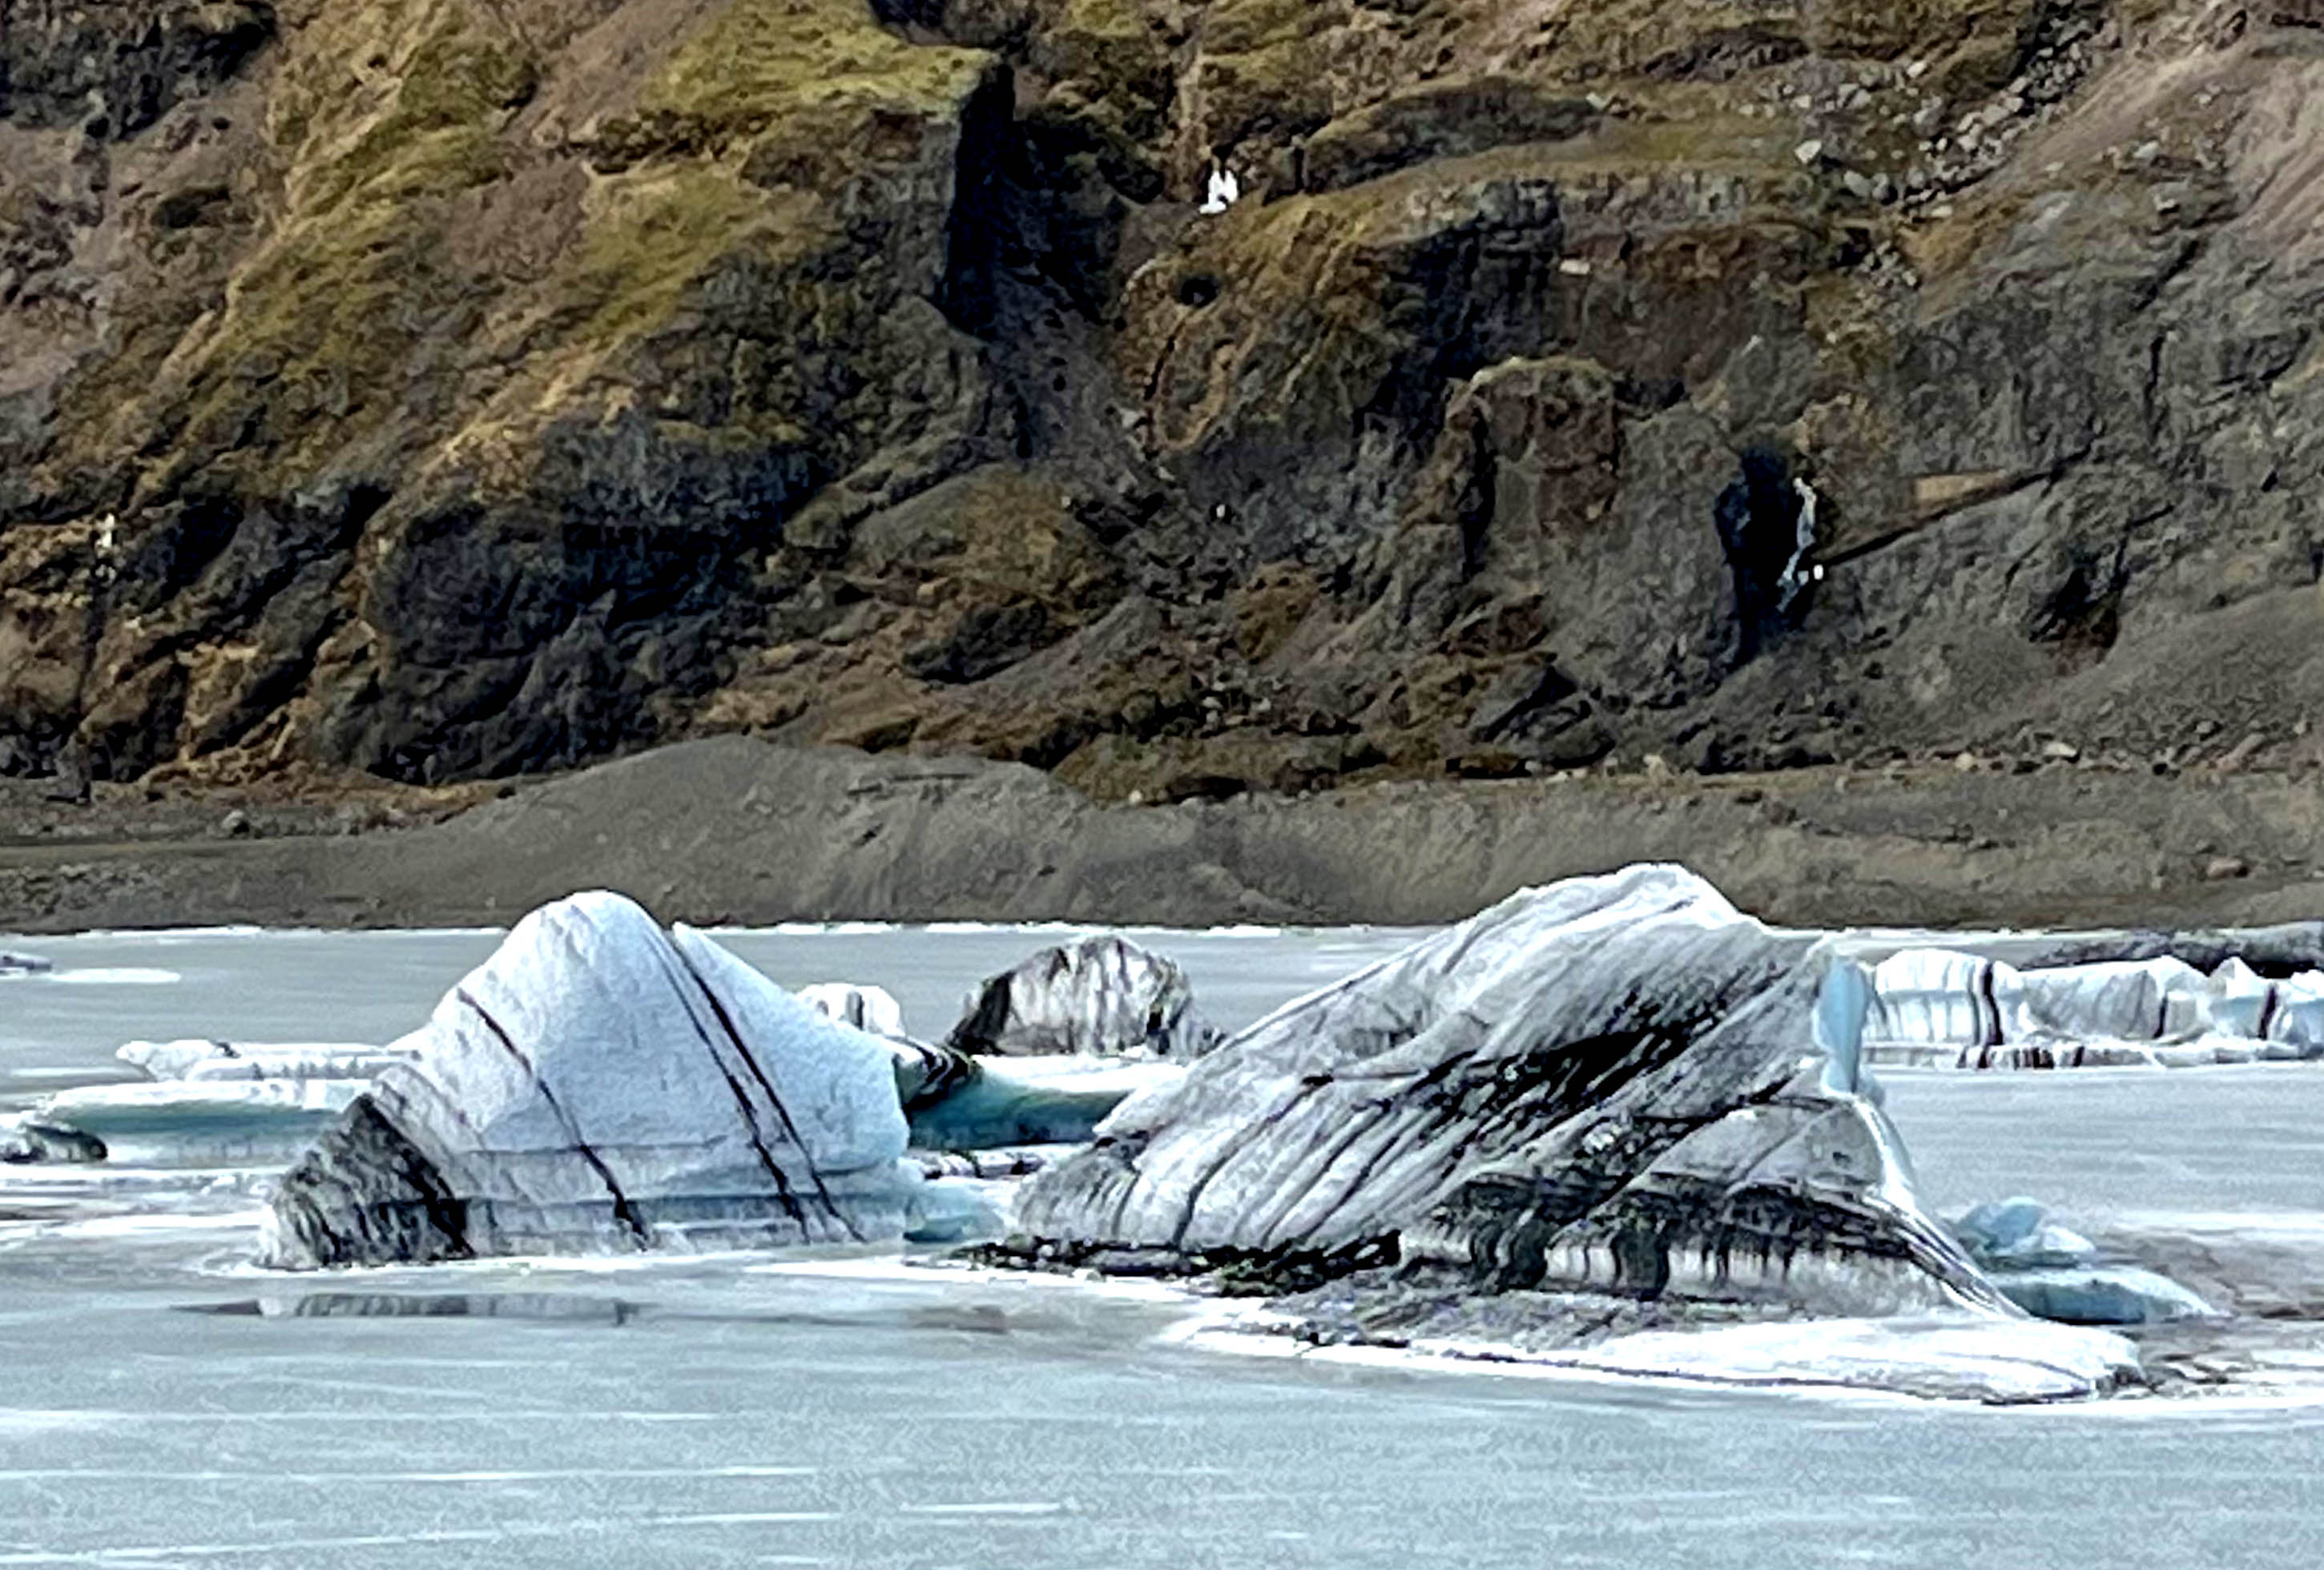 Glacial Lagoon Iceland